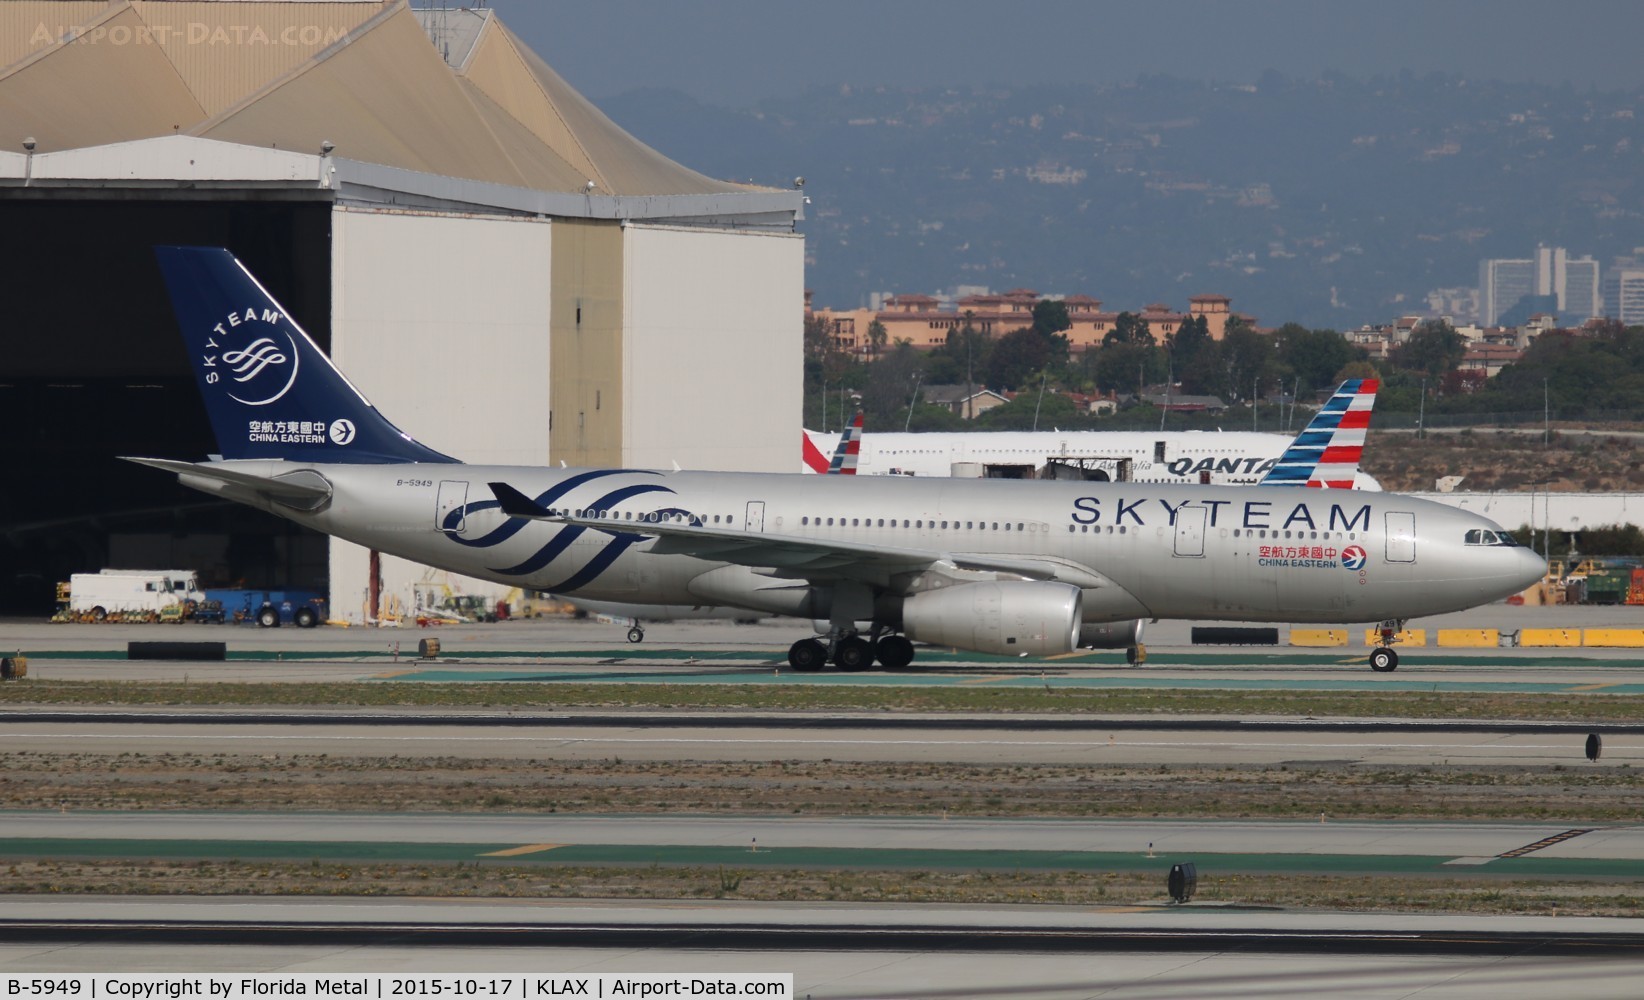 B-5949, 2014 Airbus A330-243 C/N 1537, LAX spotting